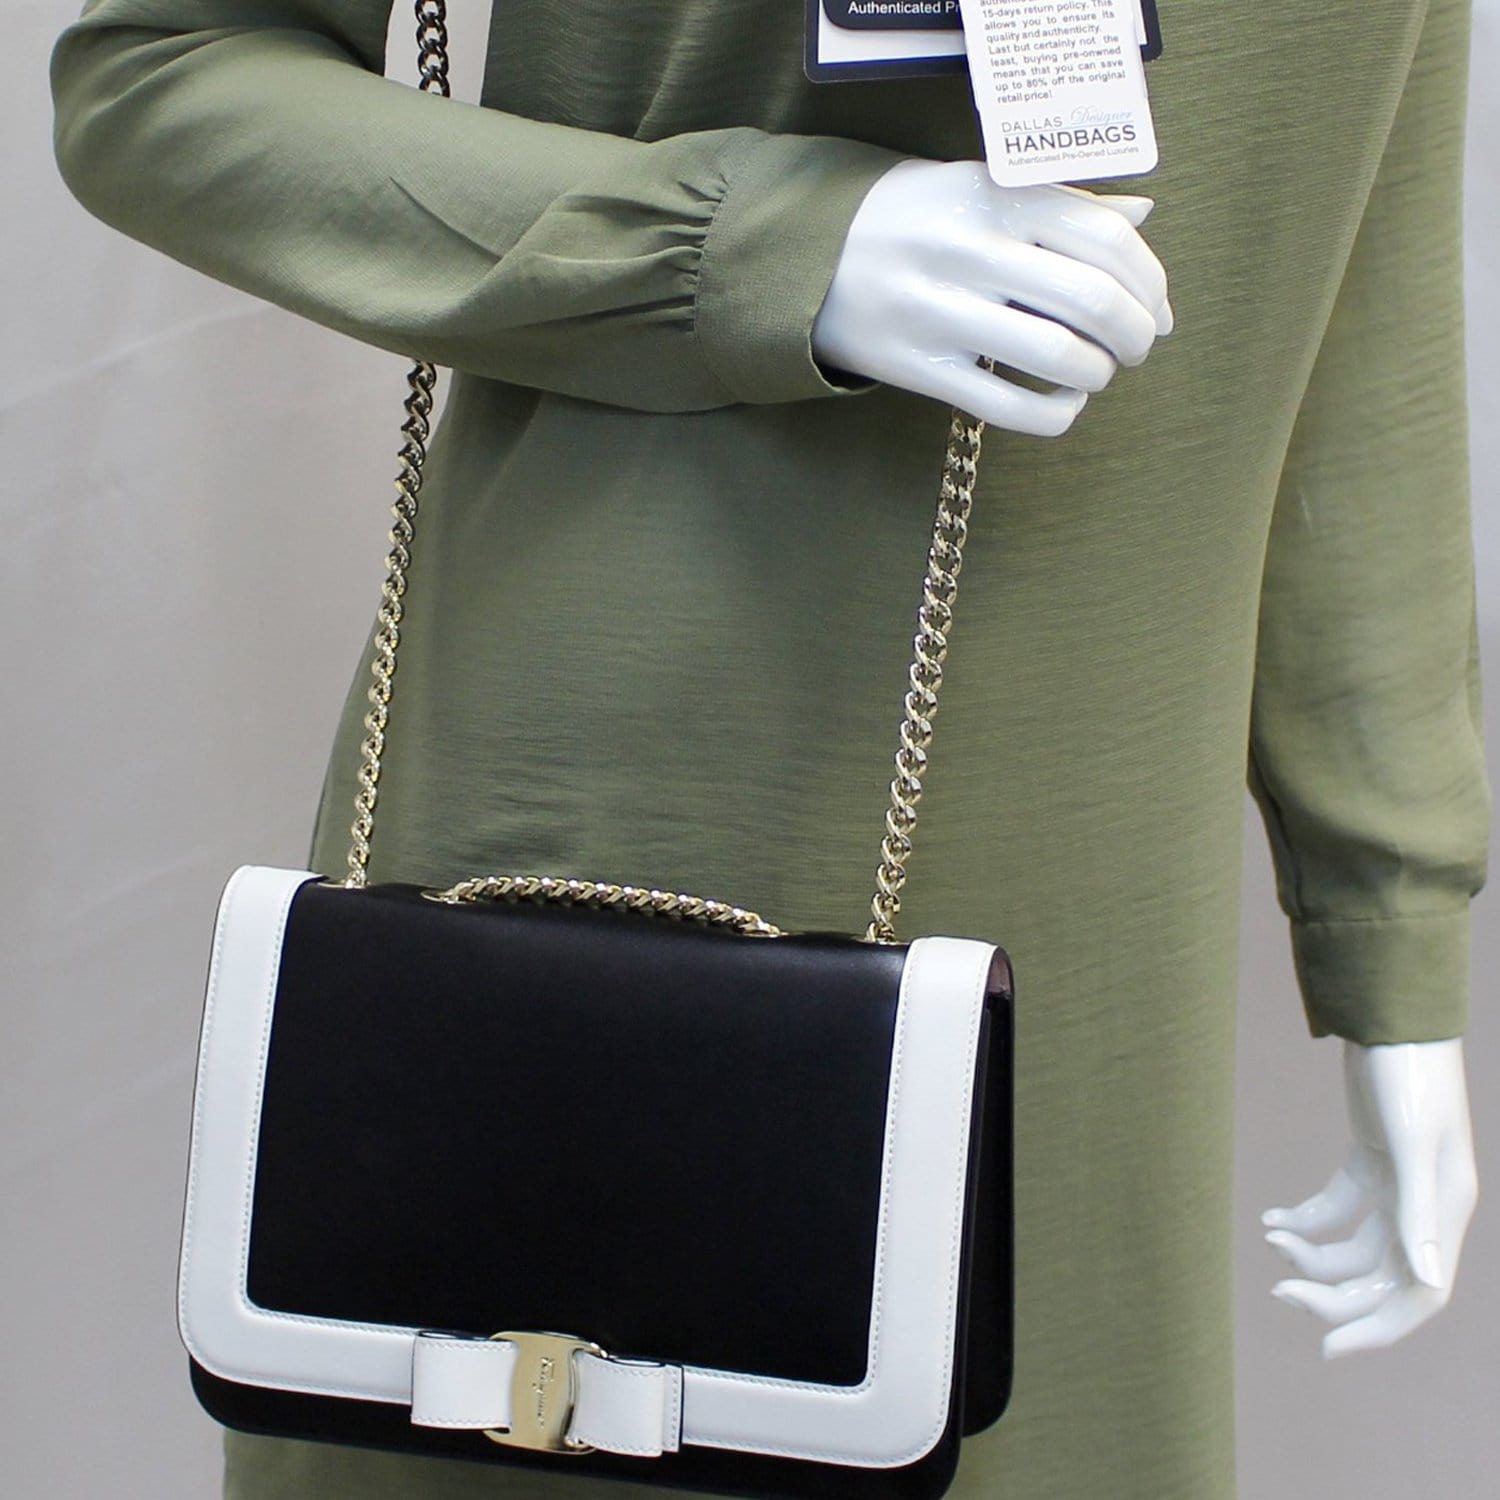 Salvatore Ferragamo Kelly Top Handle in White Handbag - Authentic Pre-Owned Designer Handbags